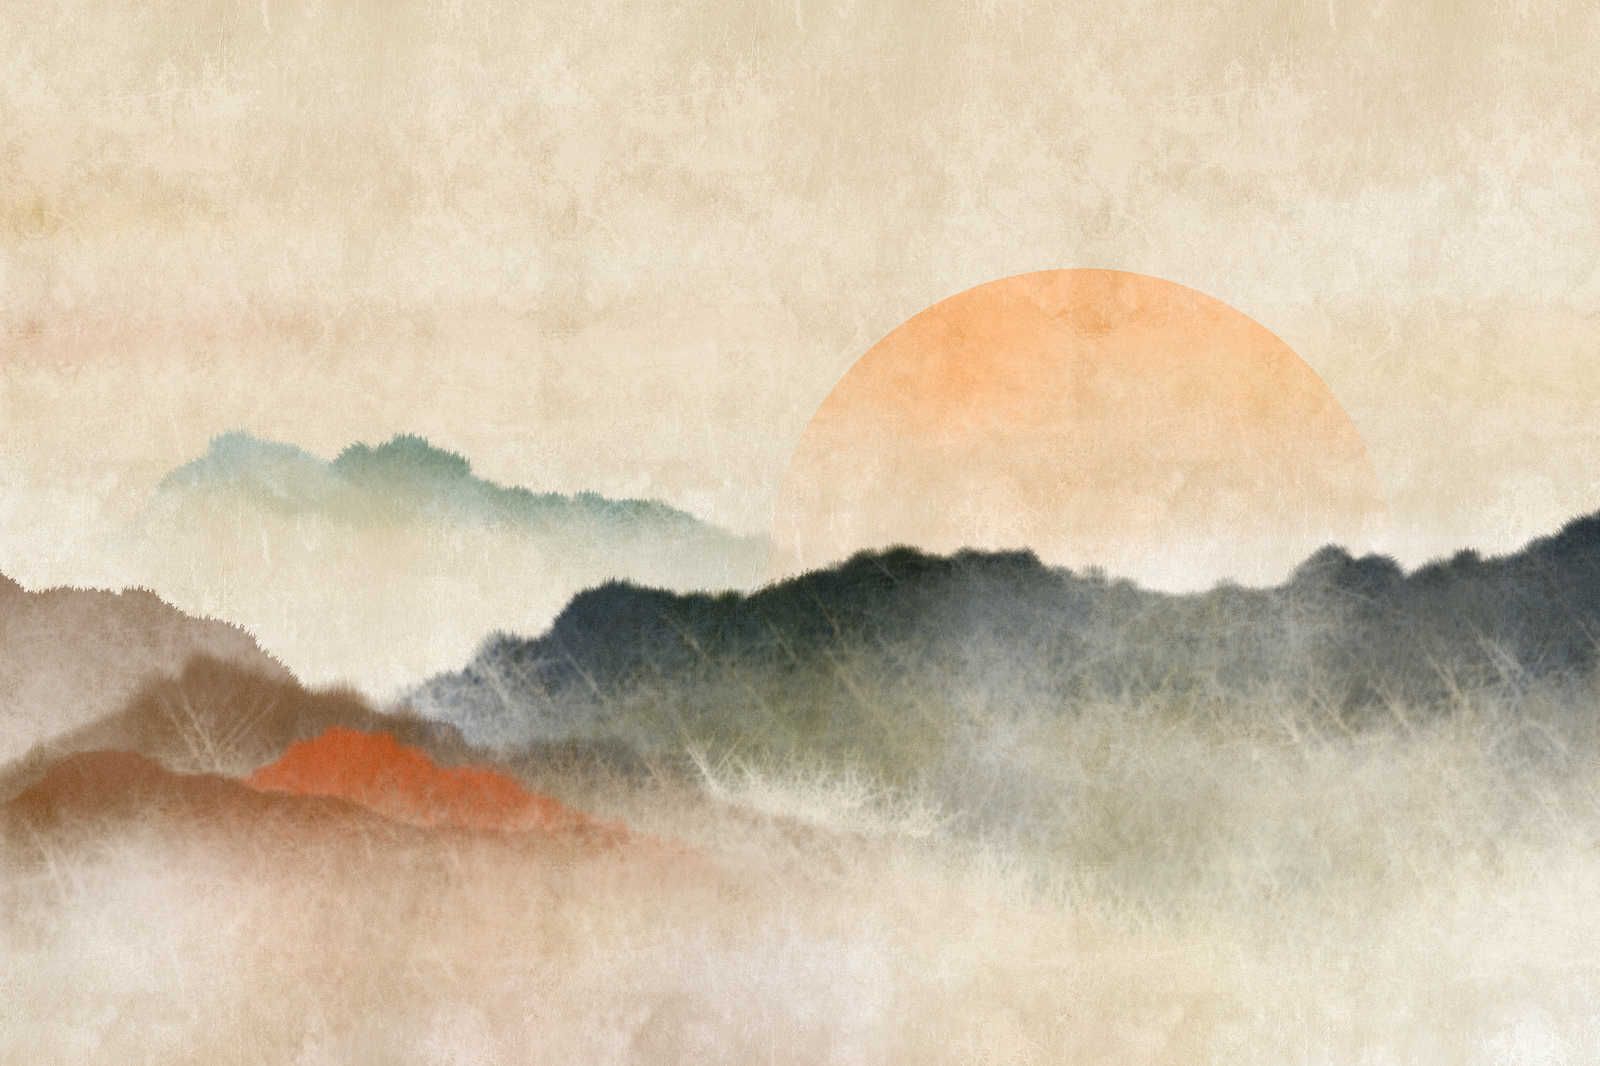             Akaishi 3 - Pintura en lienzo Amanecer, Asia Style Art Print - 0.90 m x 0.60 m
        